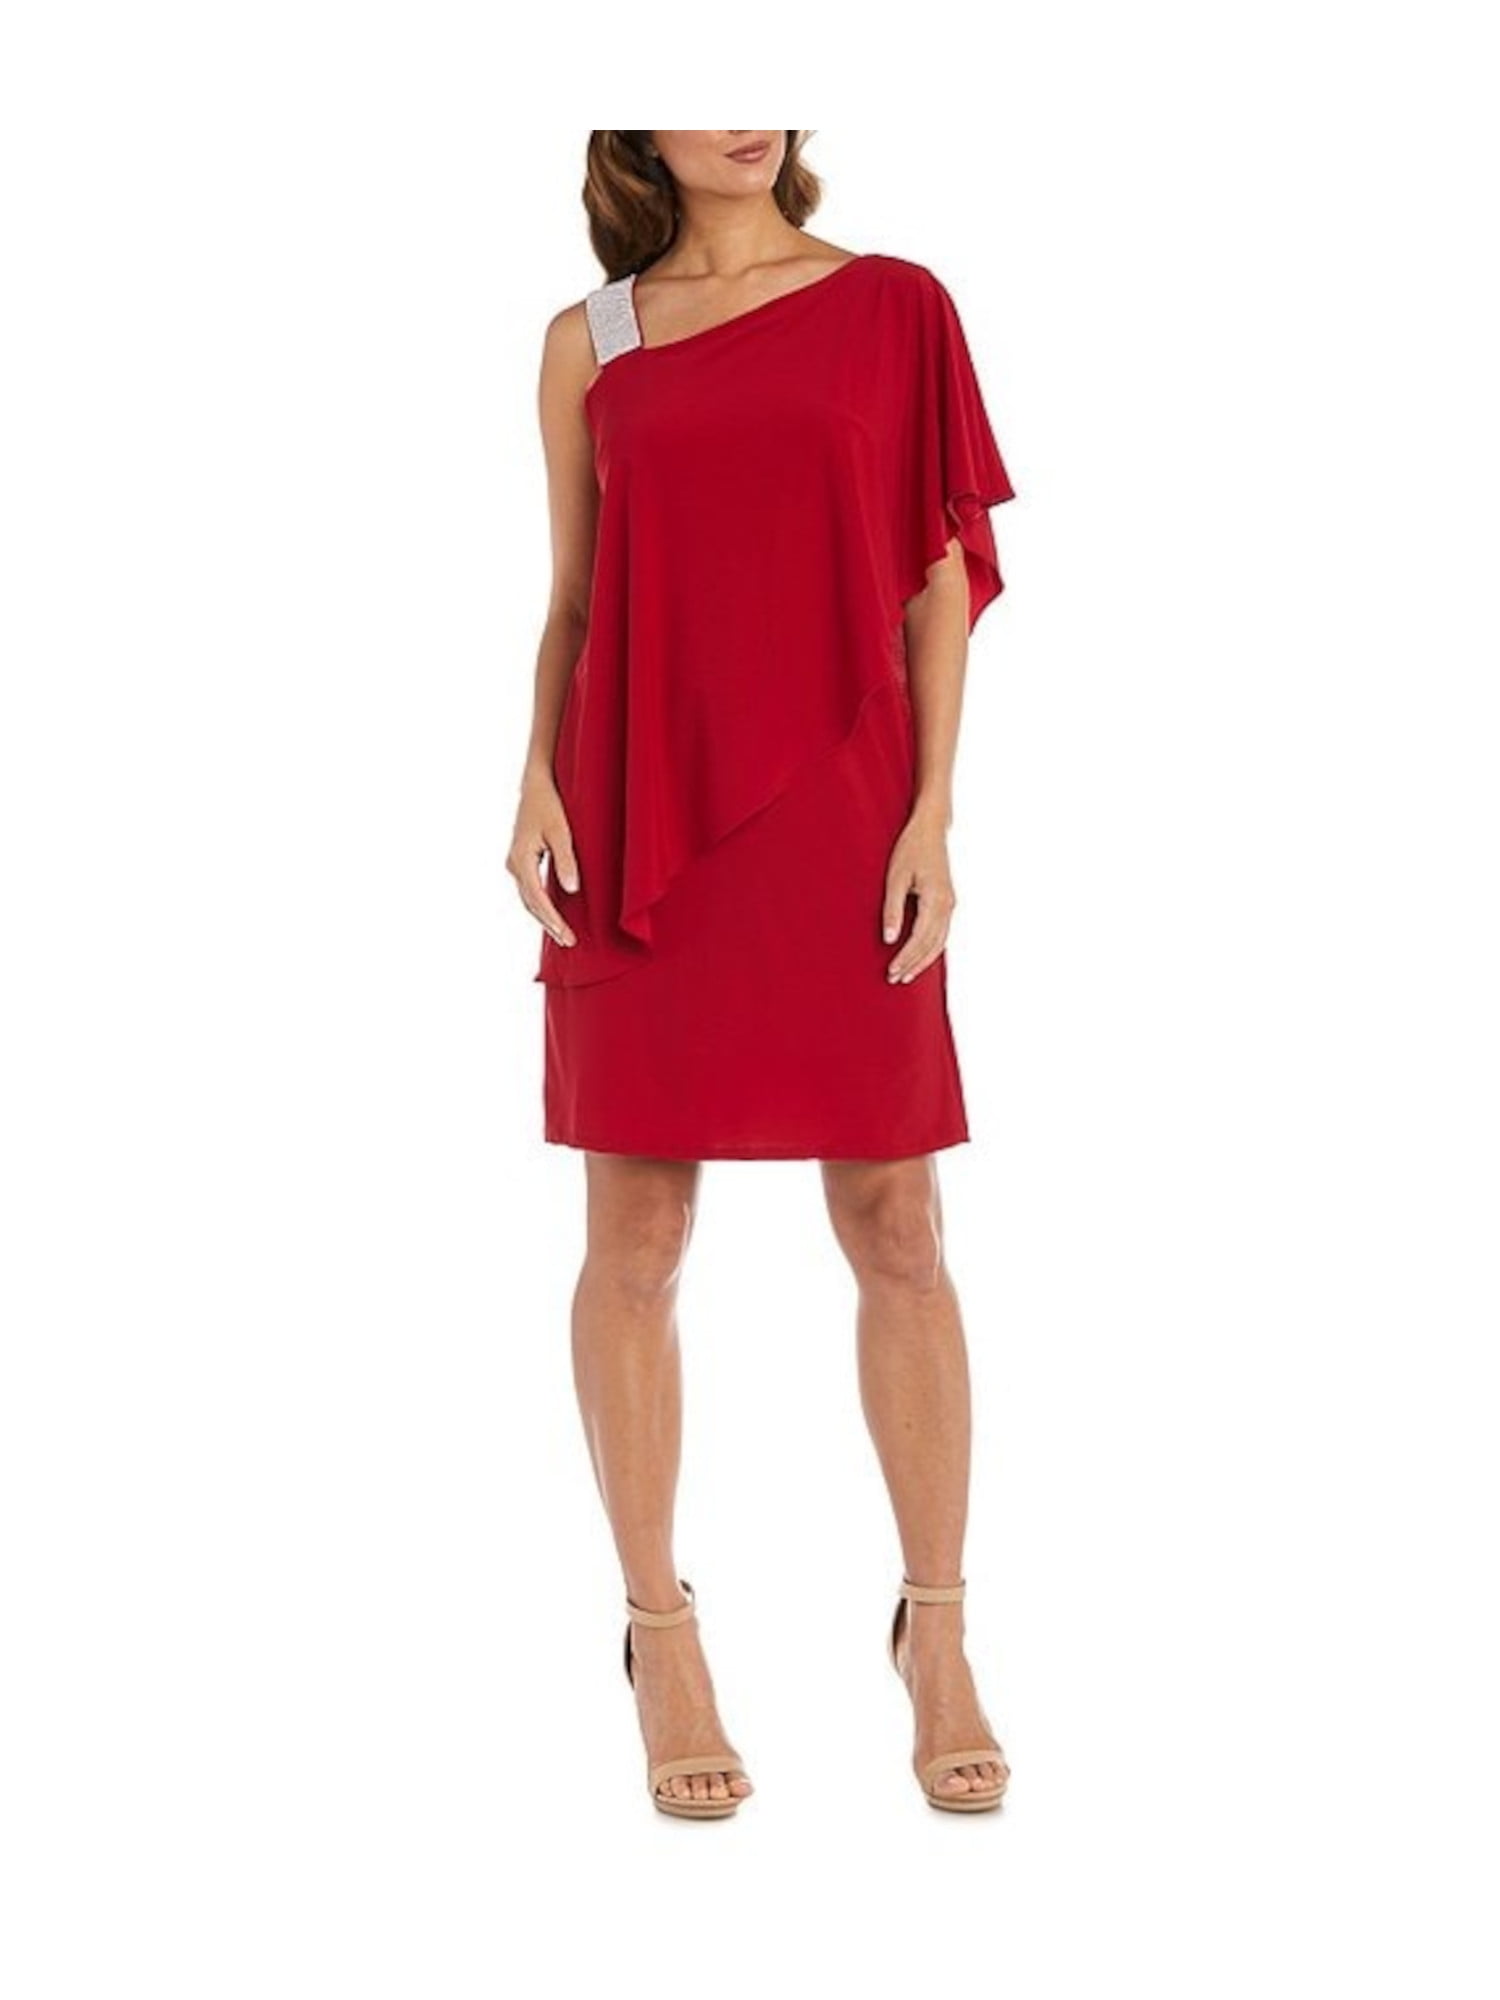 Dress - Cashmere, red & burgundy — Fashion